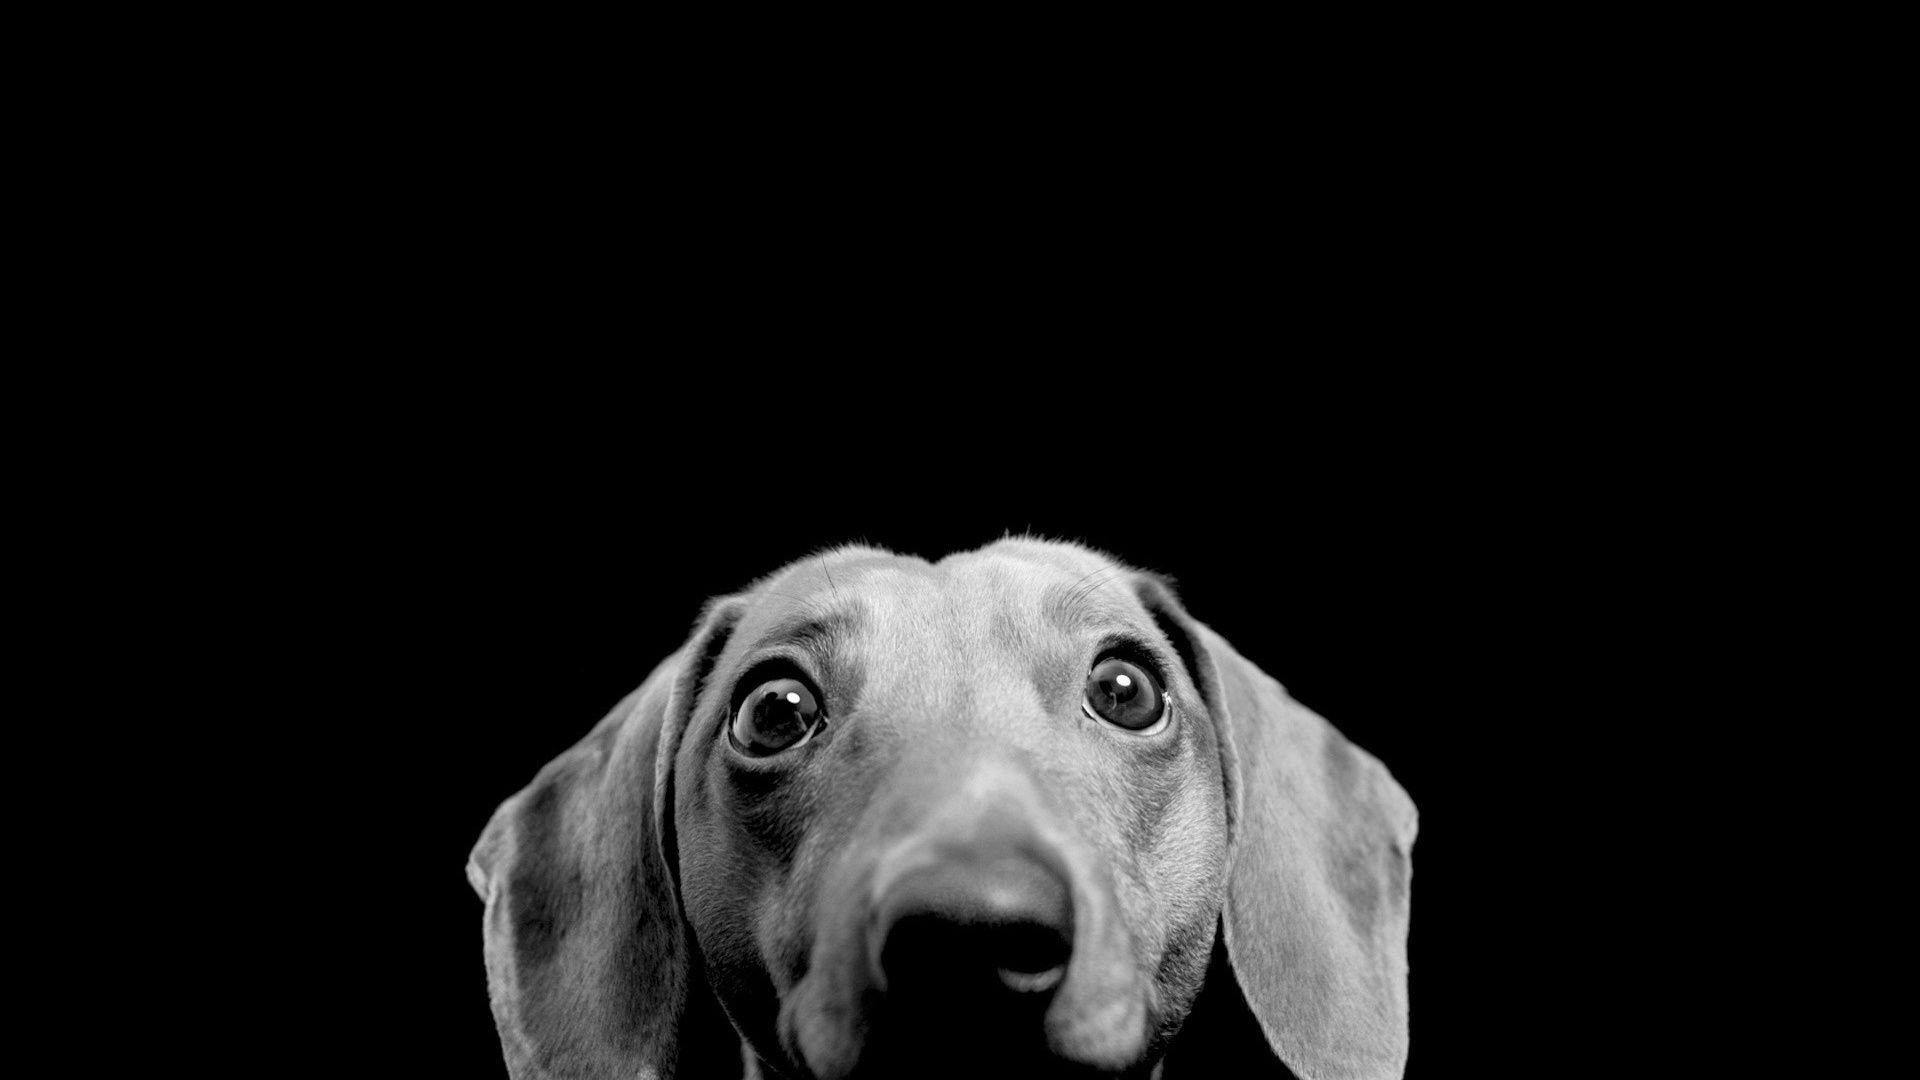 dogs dog portrait studio monochrome animal cute canine one pet mammal eye looking